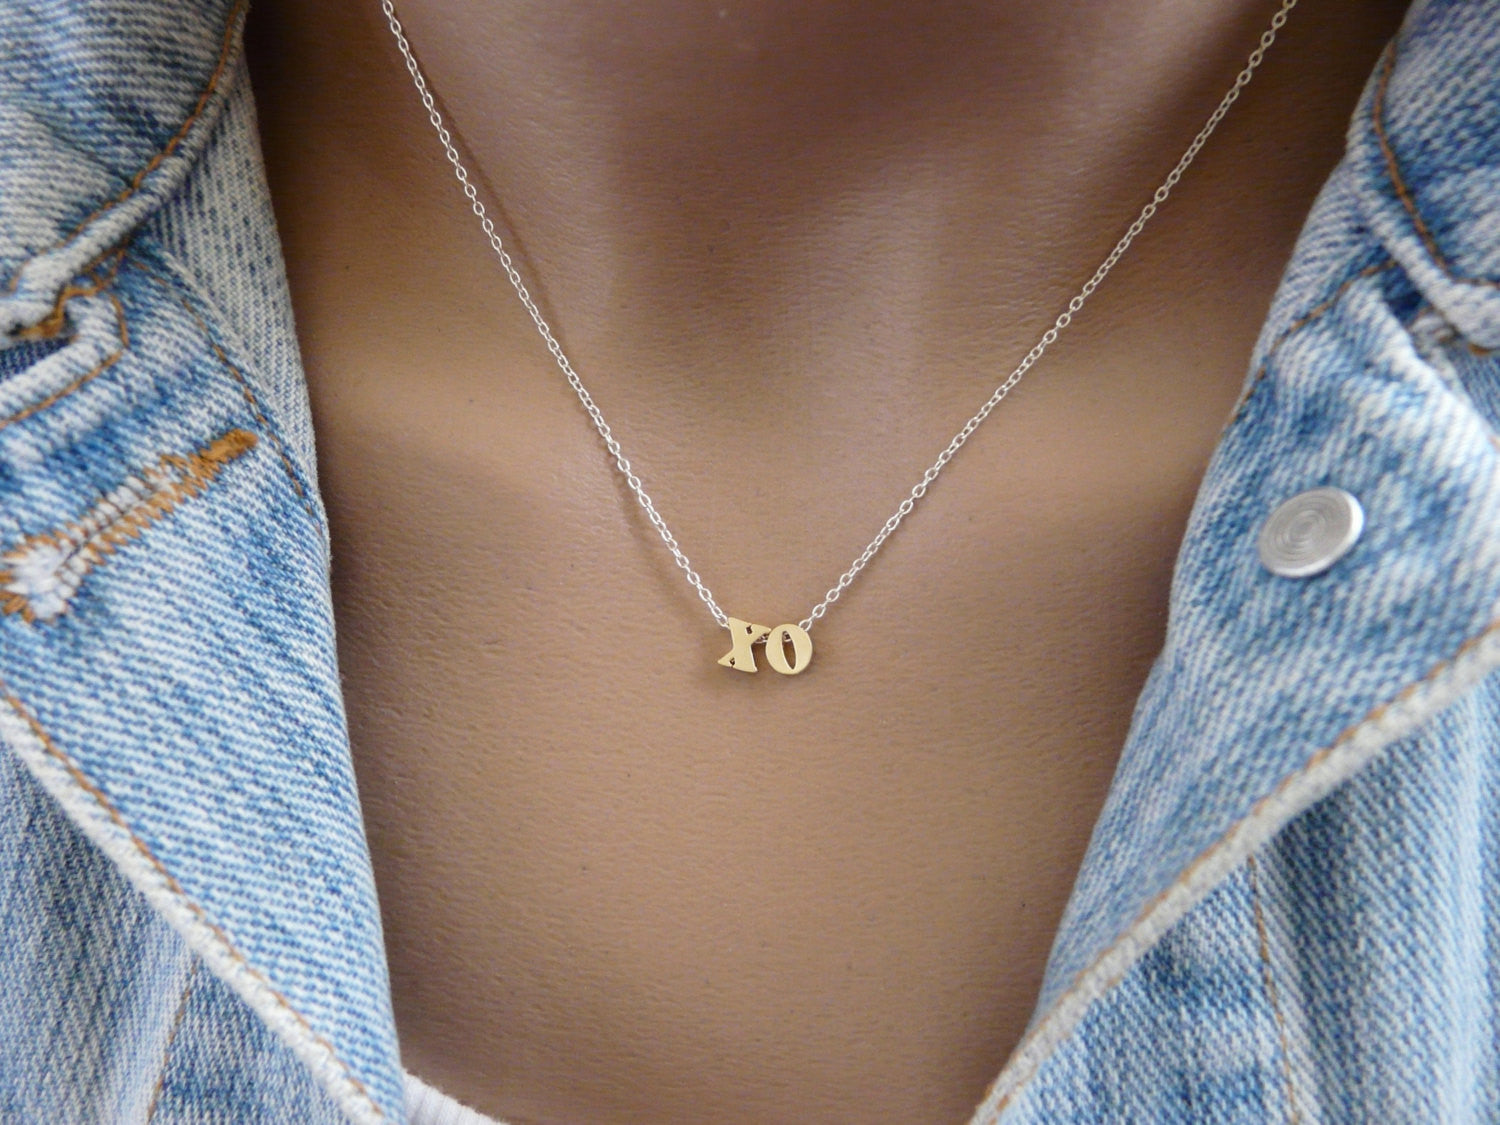 XO necklace - OpaLandJewelry